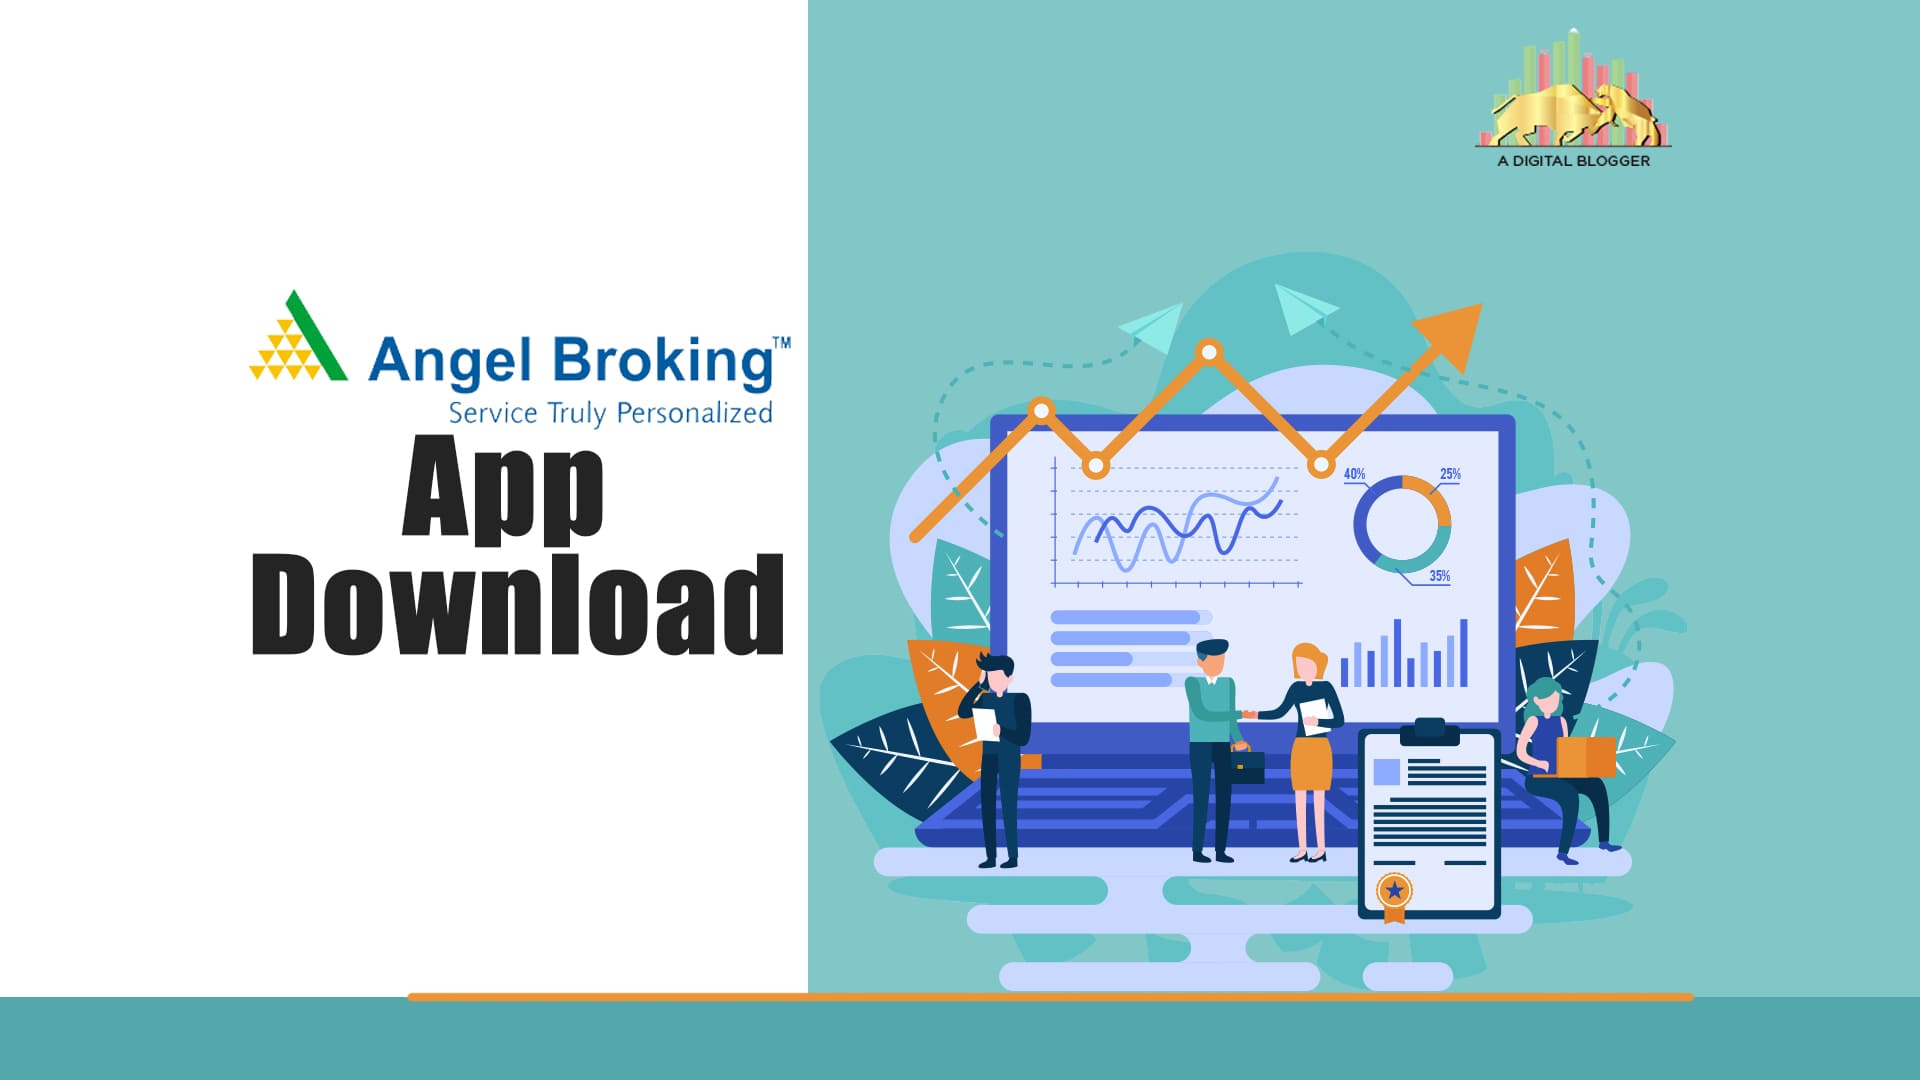 angel broking mobile trading software download